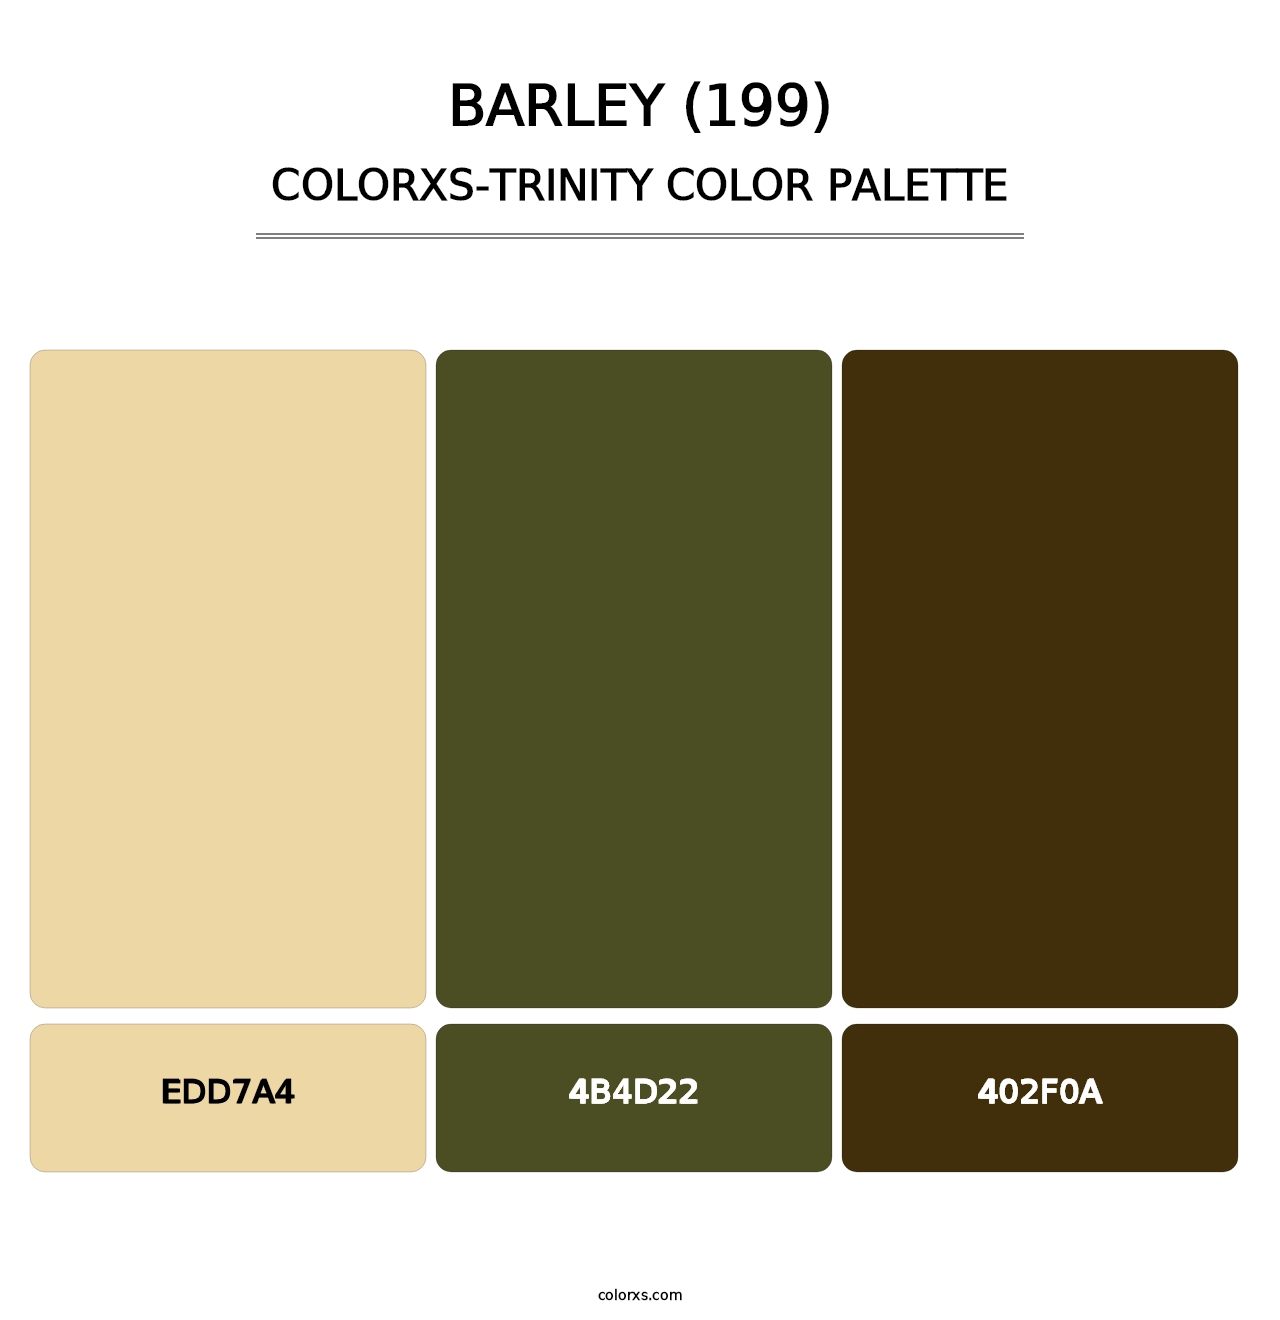 Barley (199) - Colorxs Trinity Palette